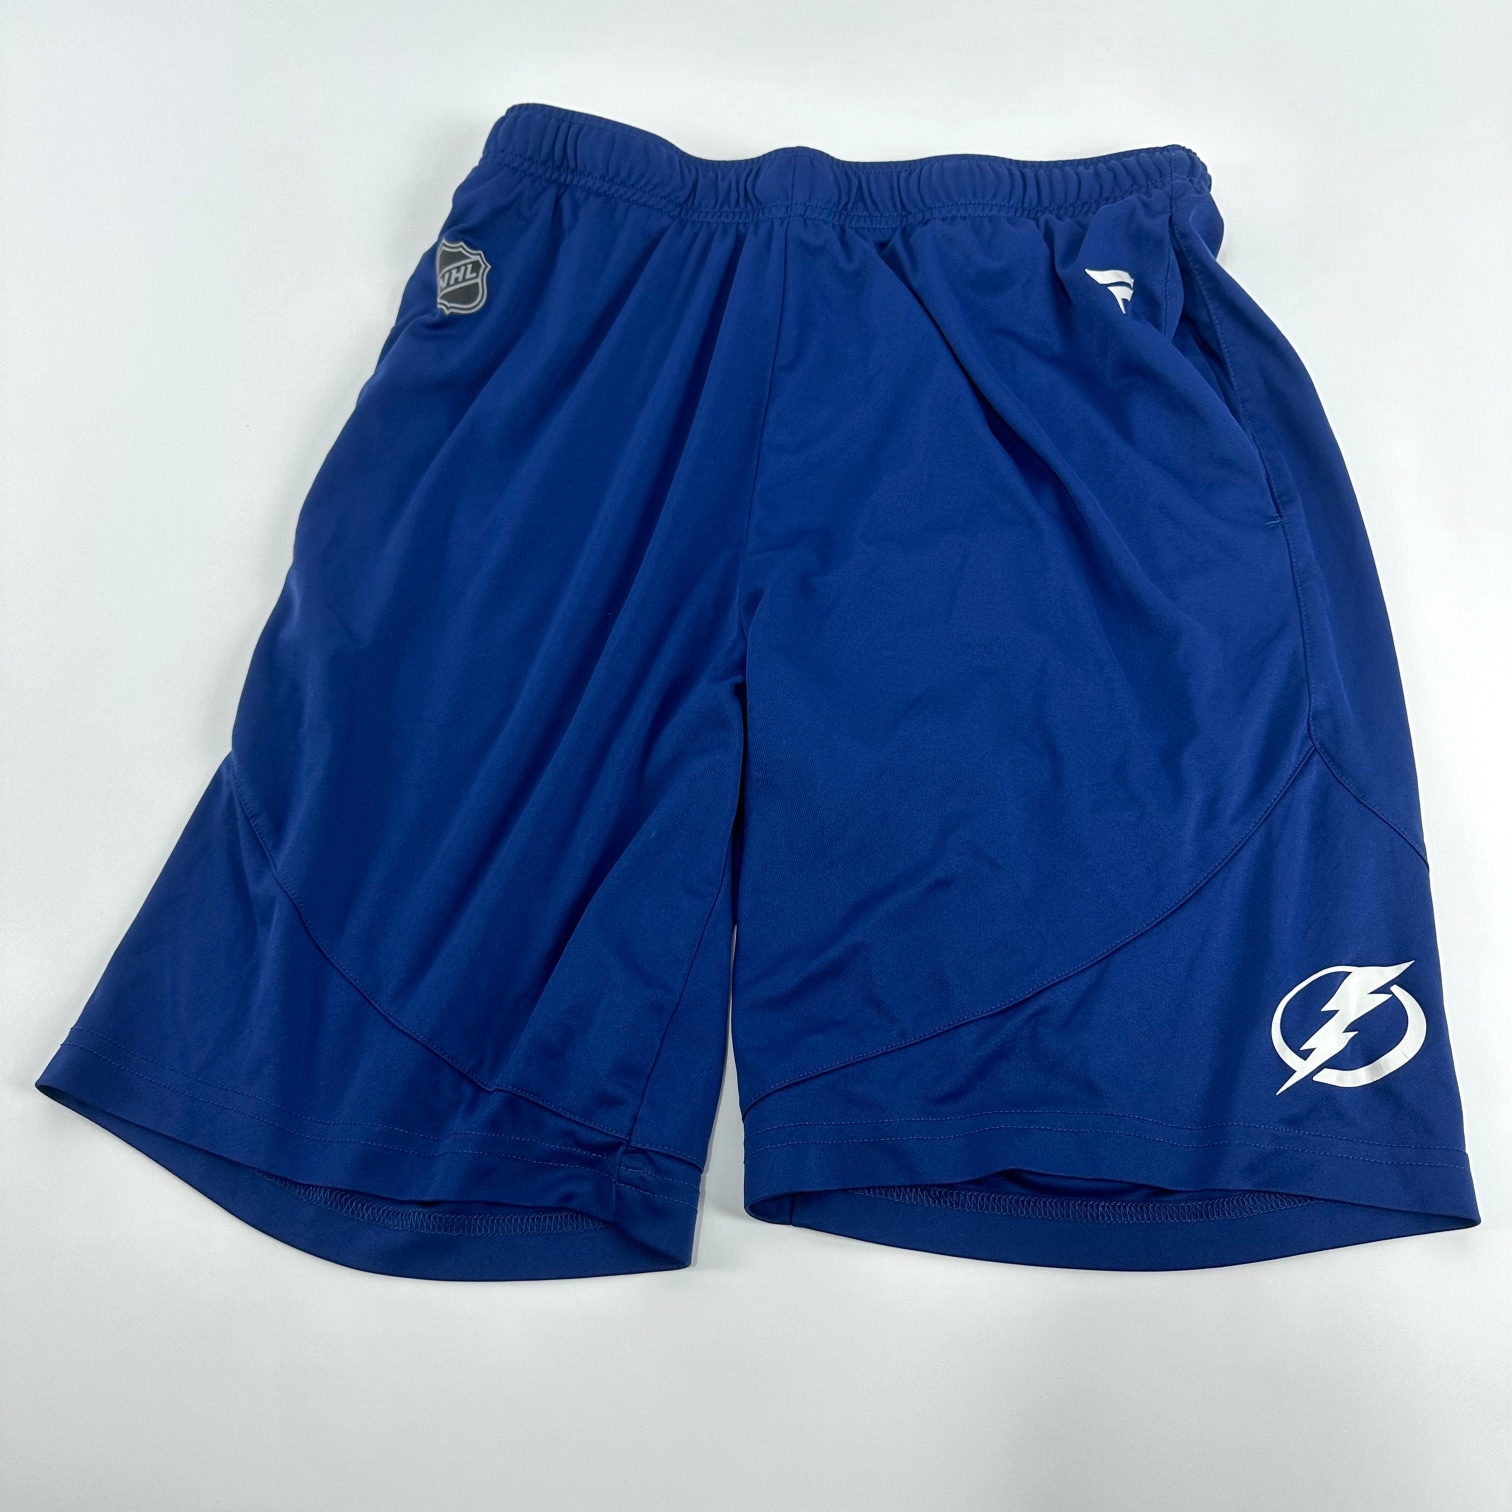 Brand New Blue Tampa Bay Lightning Fanatics Shorts | #TBL272 - TEAM ISSUED - LARGE